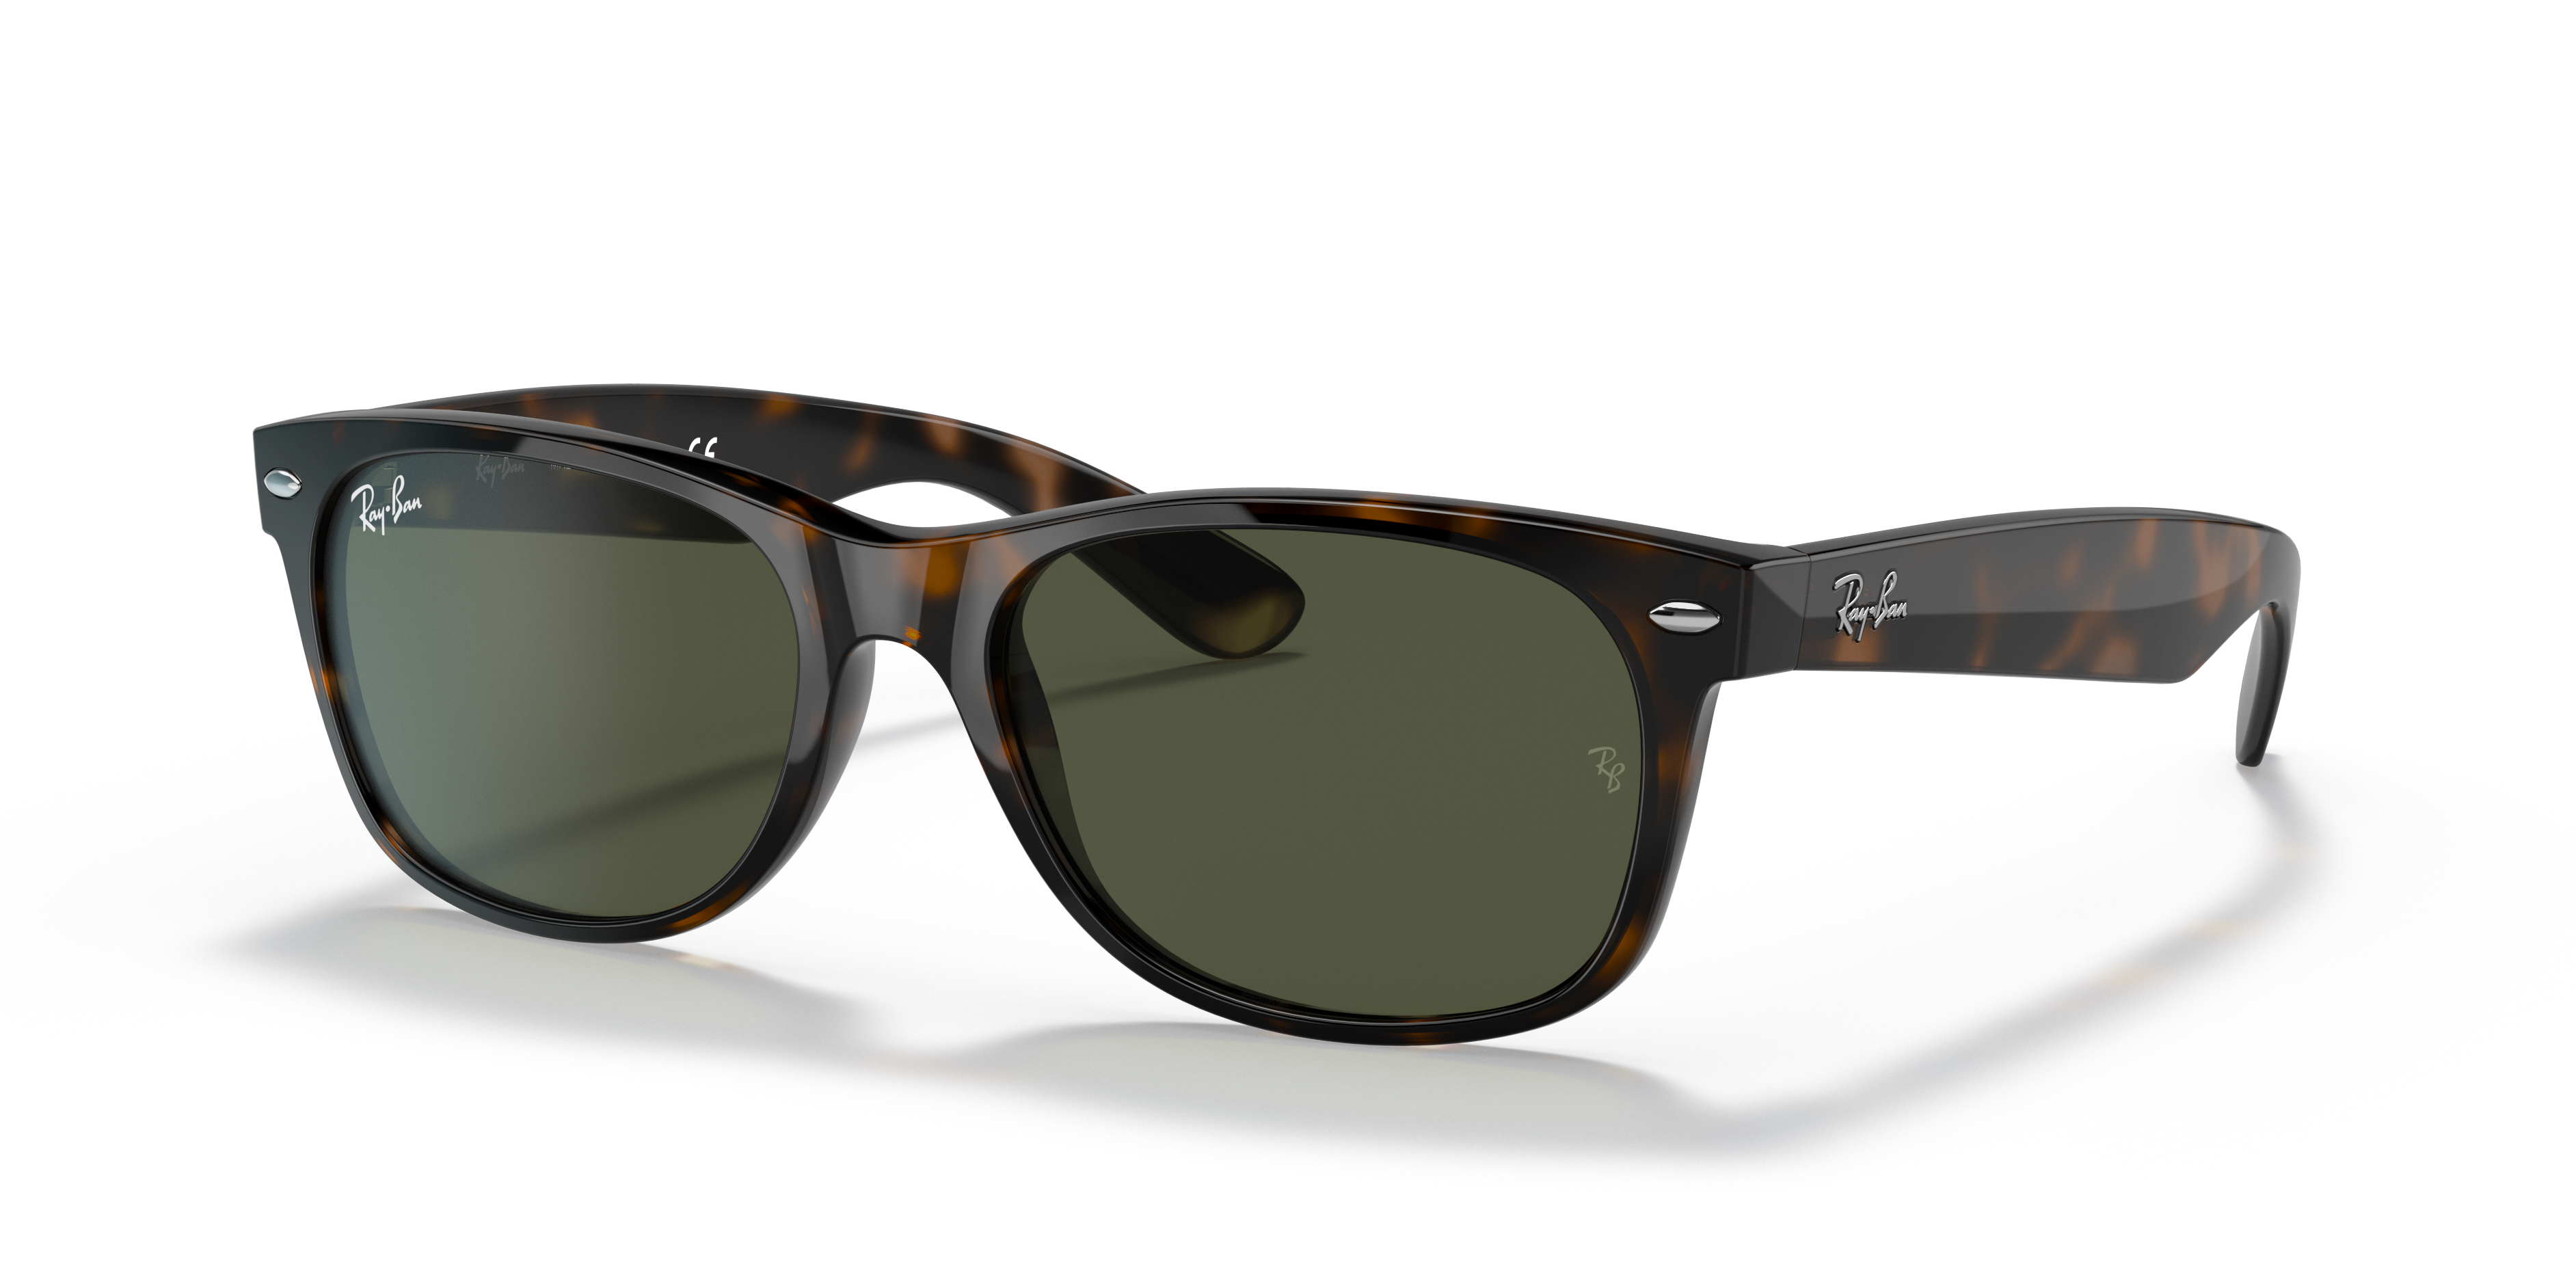 Angle_Left01 Ray-Ban New Wayfarer RB 2132 (902L) Sunglasses Green / Tortoise Shell